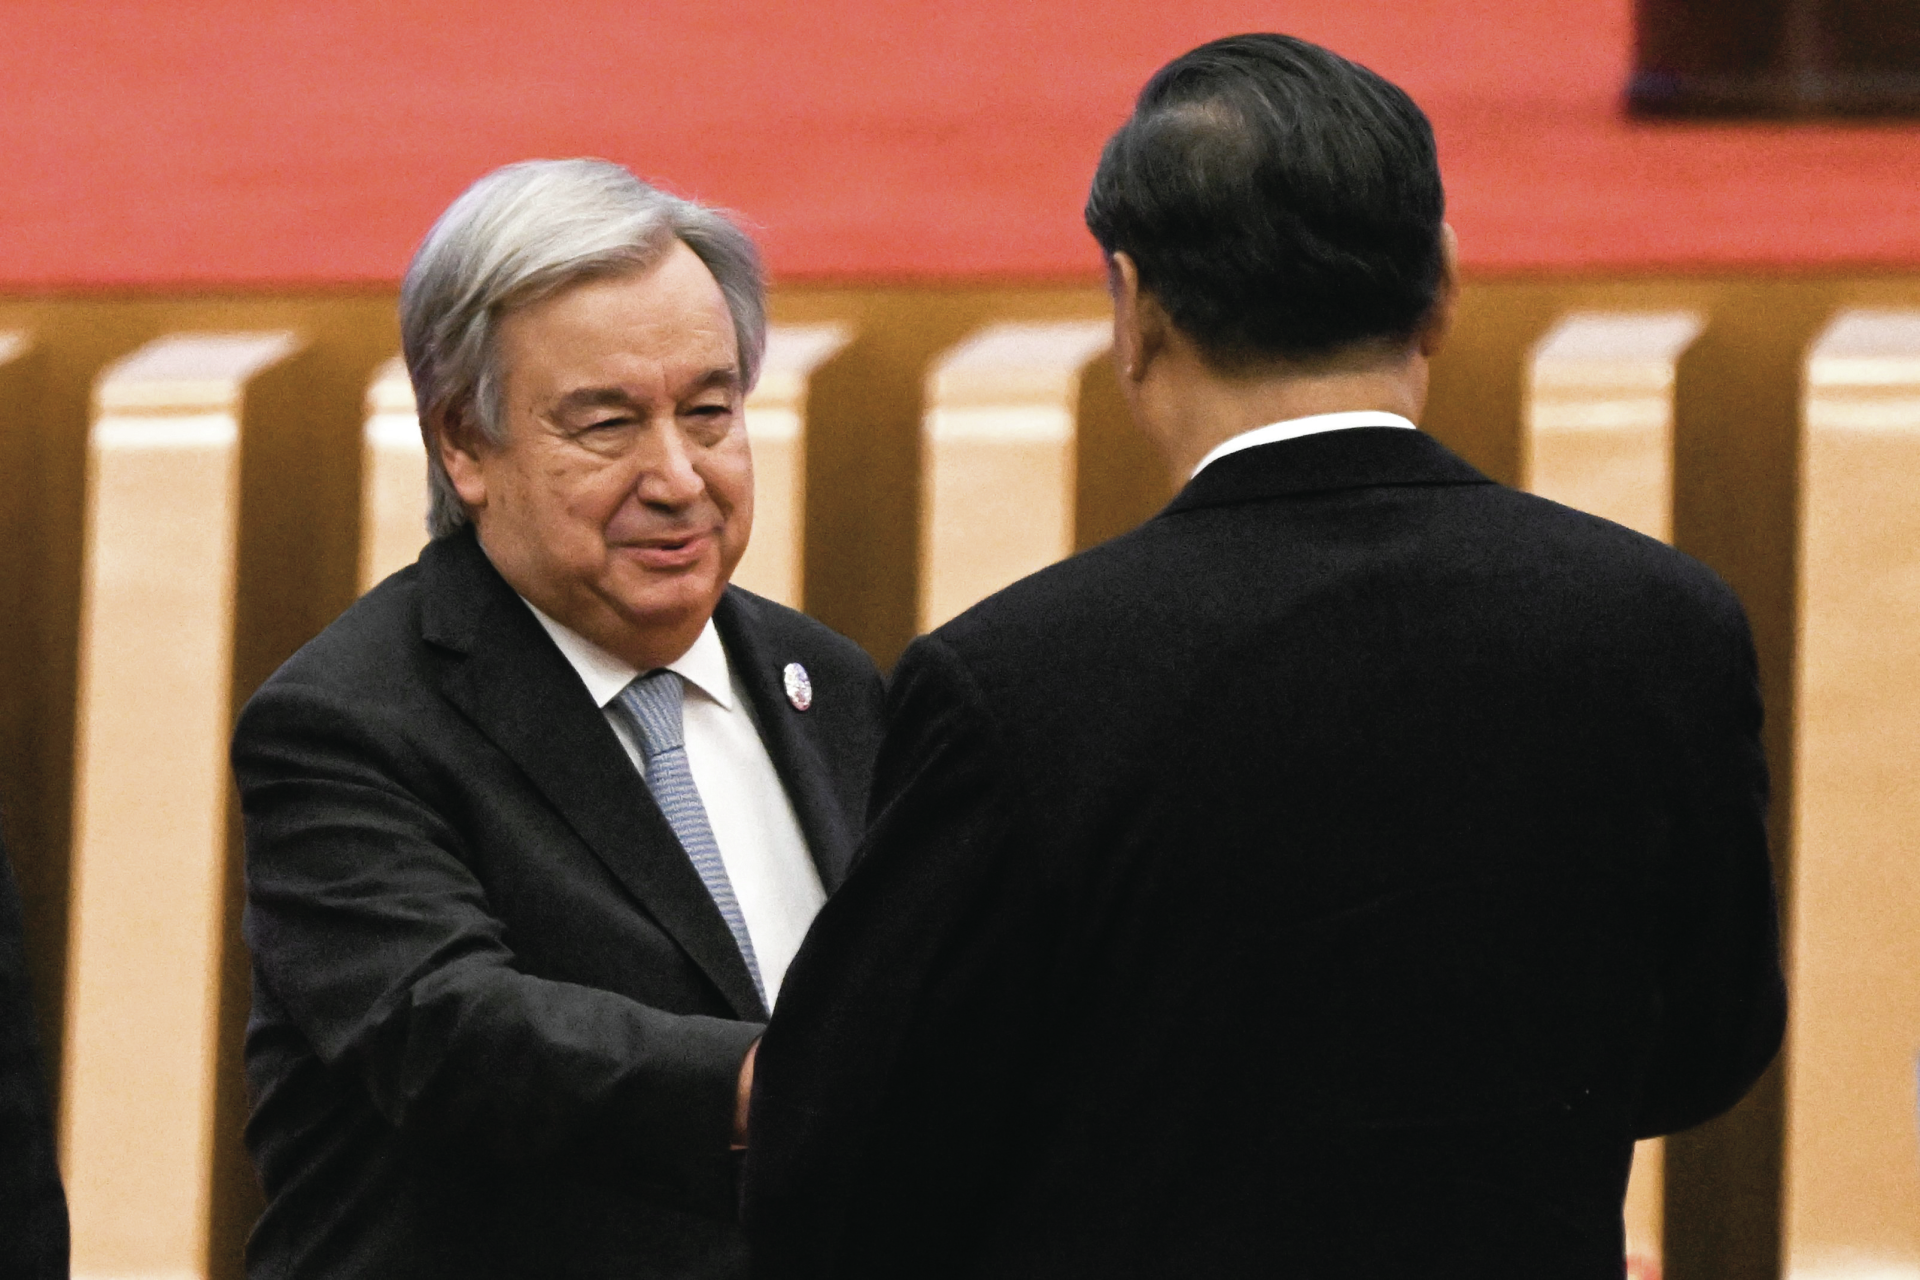 “There was no meeting”. Guterres e Putin na China